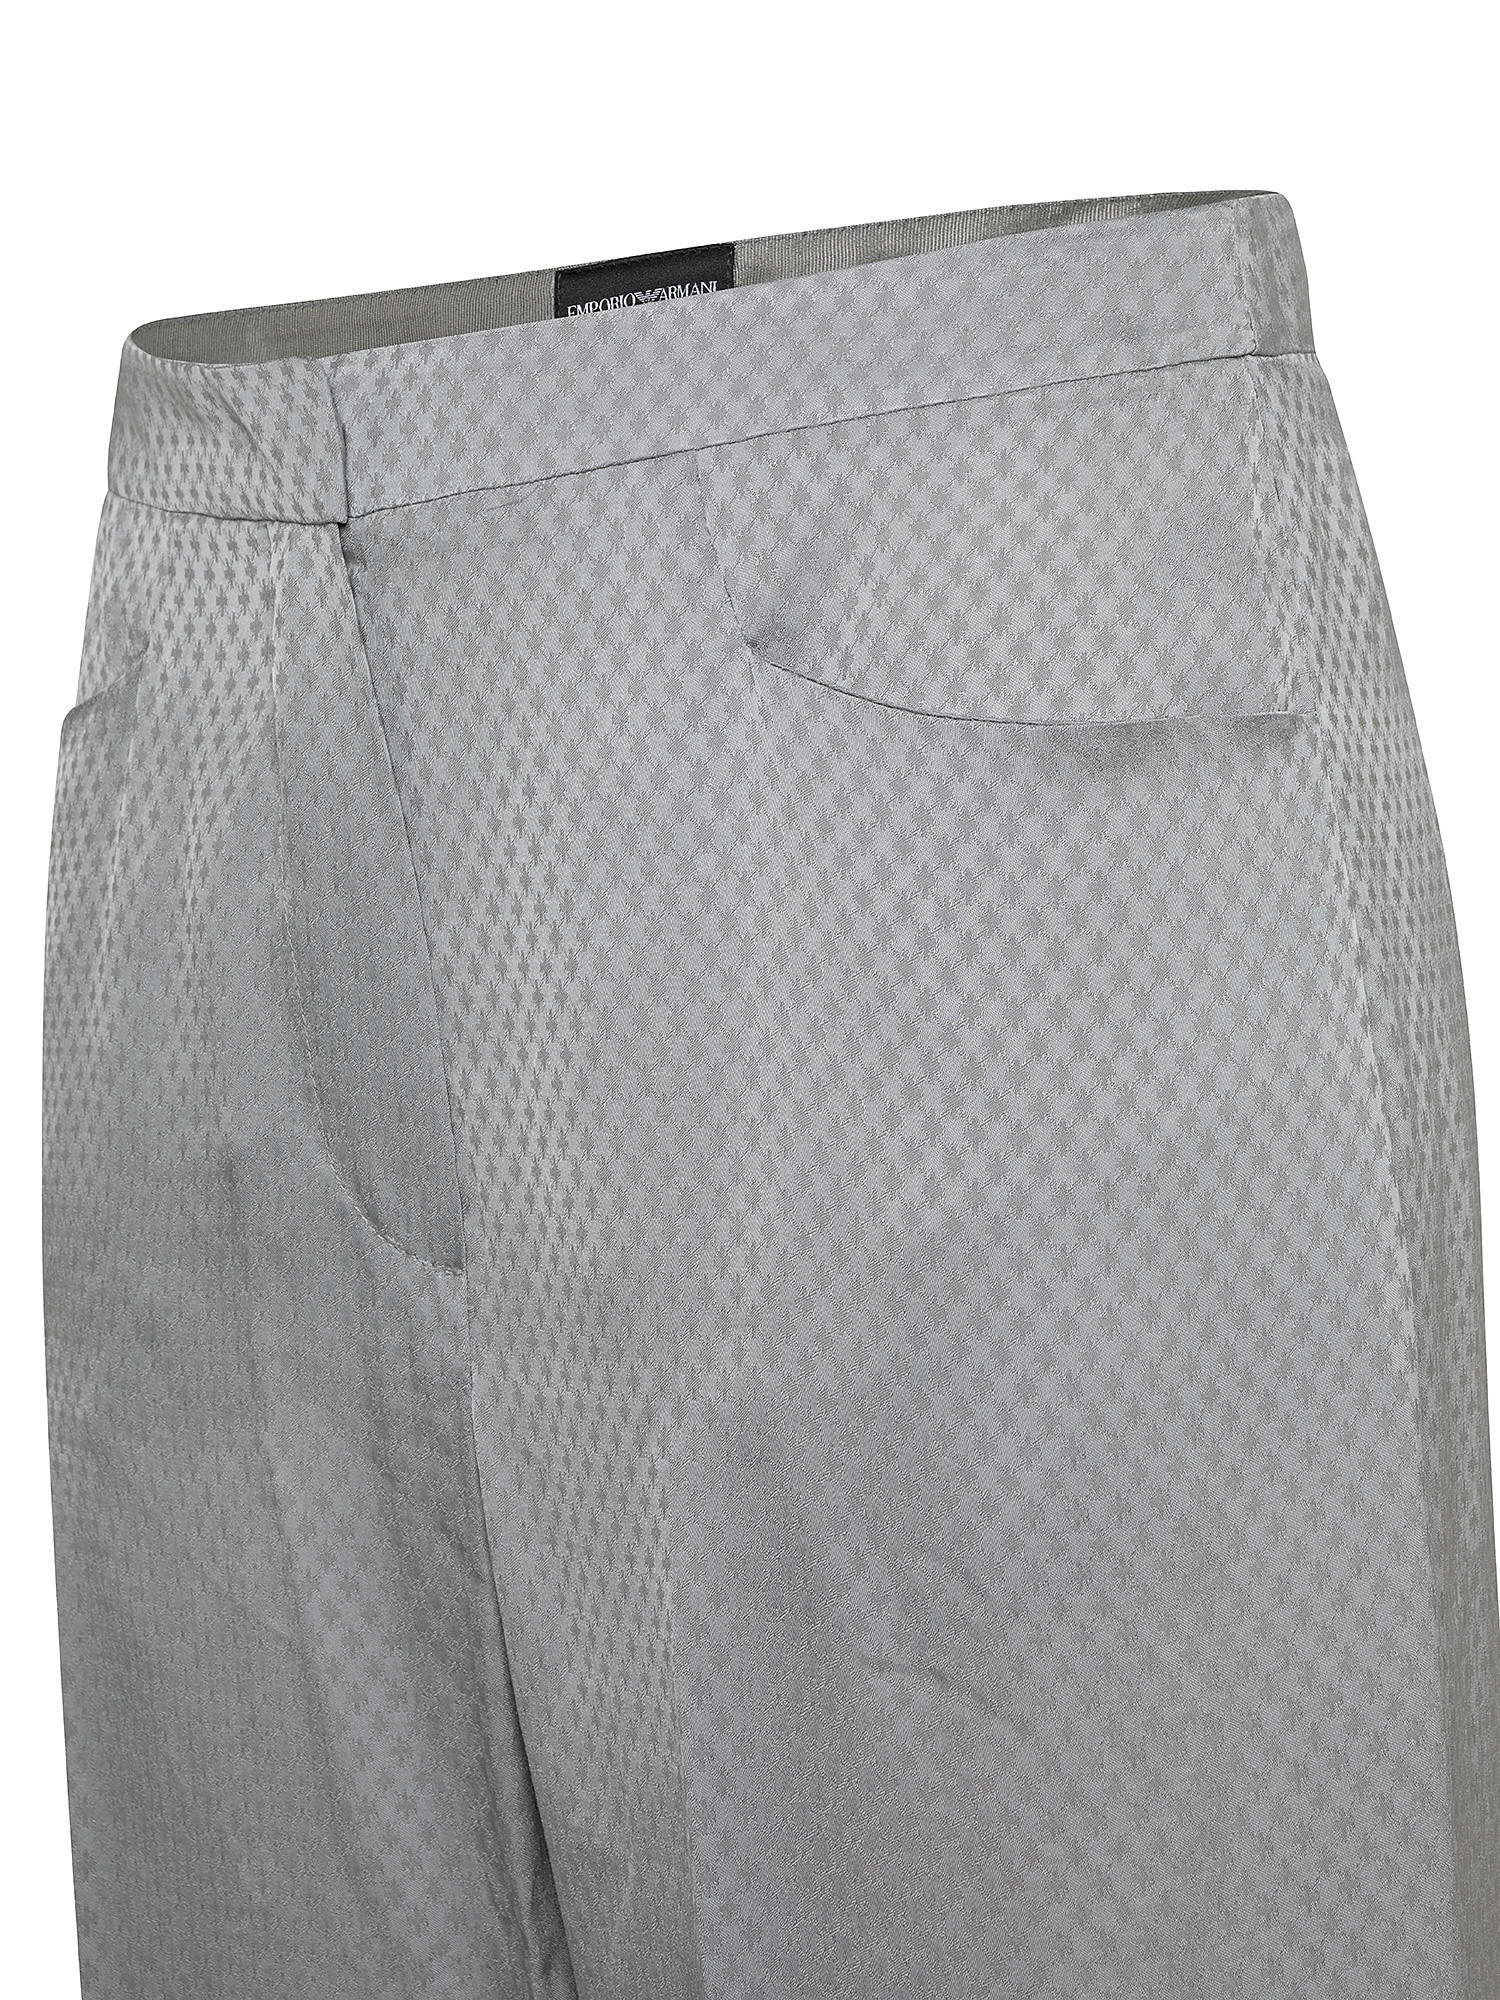 Pantalone 5 tasche, Grigio, large image number 2